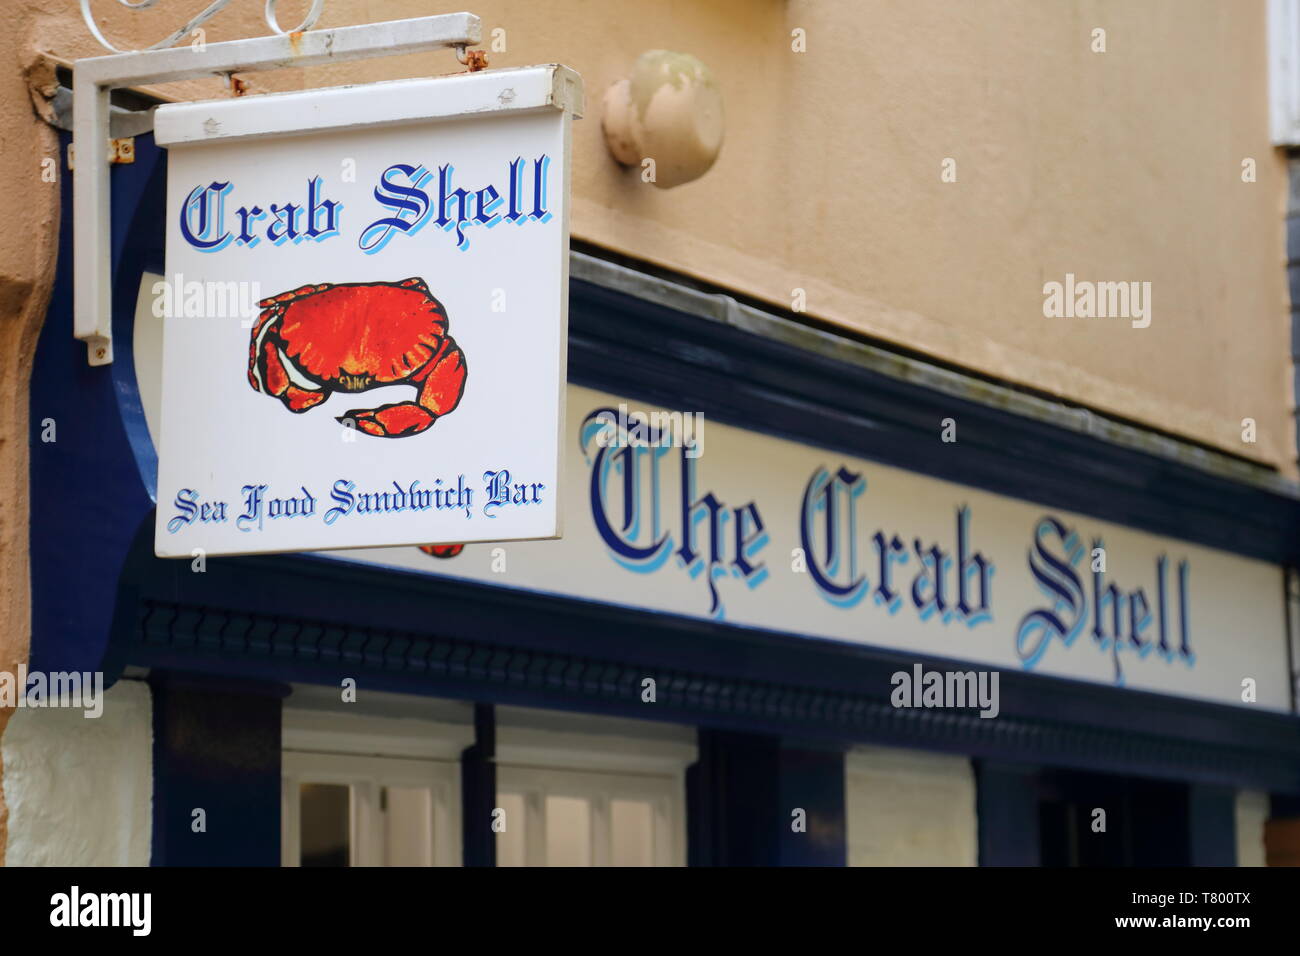 Die Krabbe Shell Sea Food Sandwich Bar in Dartmouth, Devon, Großbritannien Stockfoto